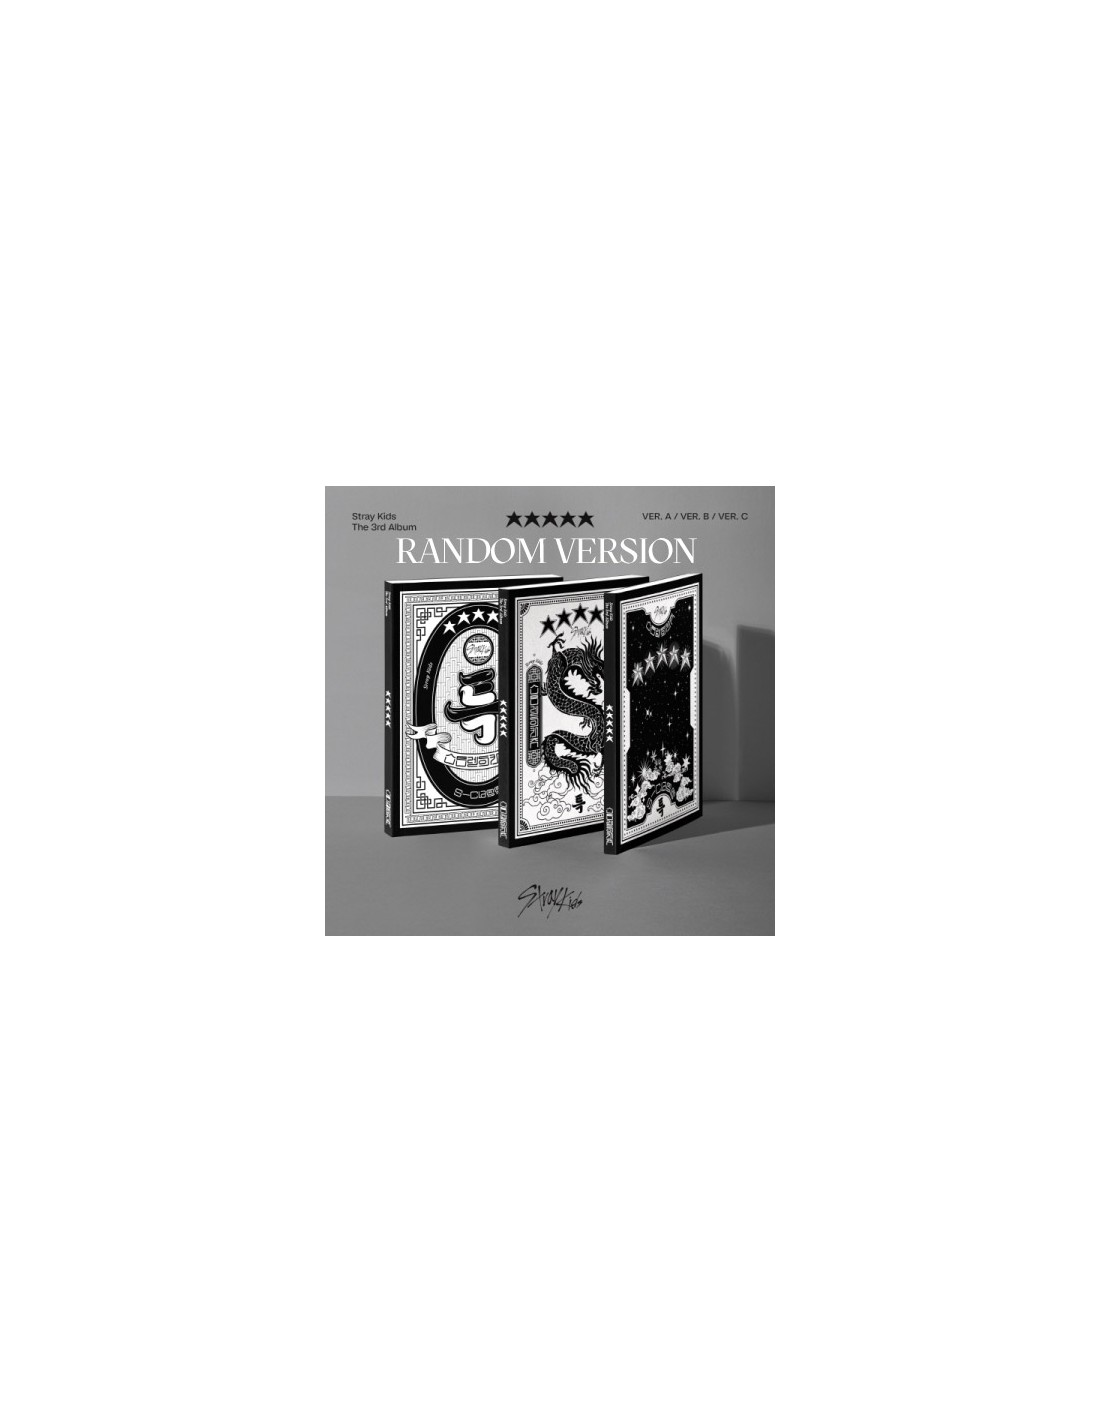 Stray Kids 3rd Album (5-STAR) – Idolpopuk